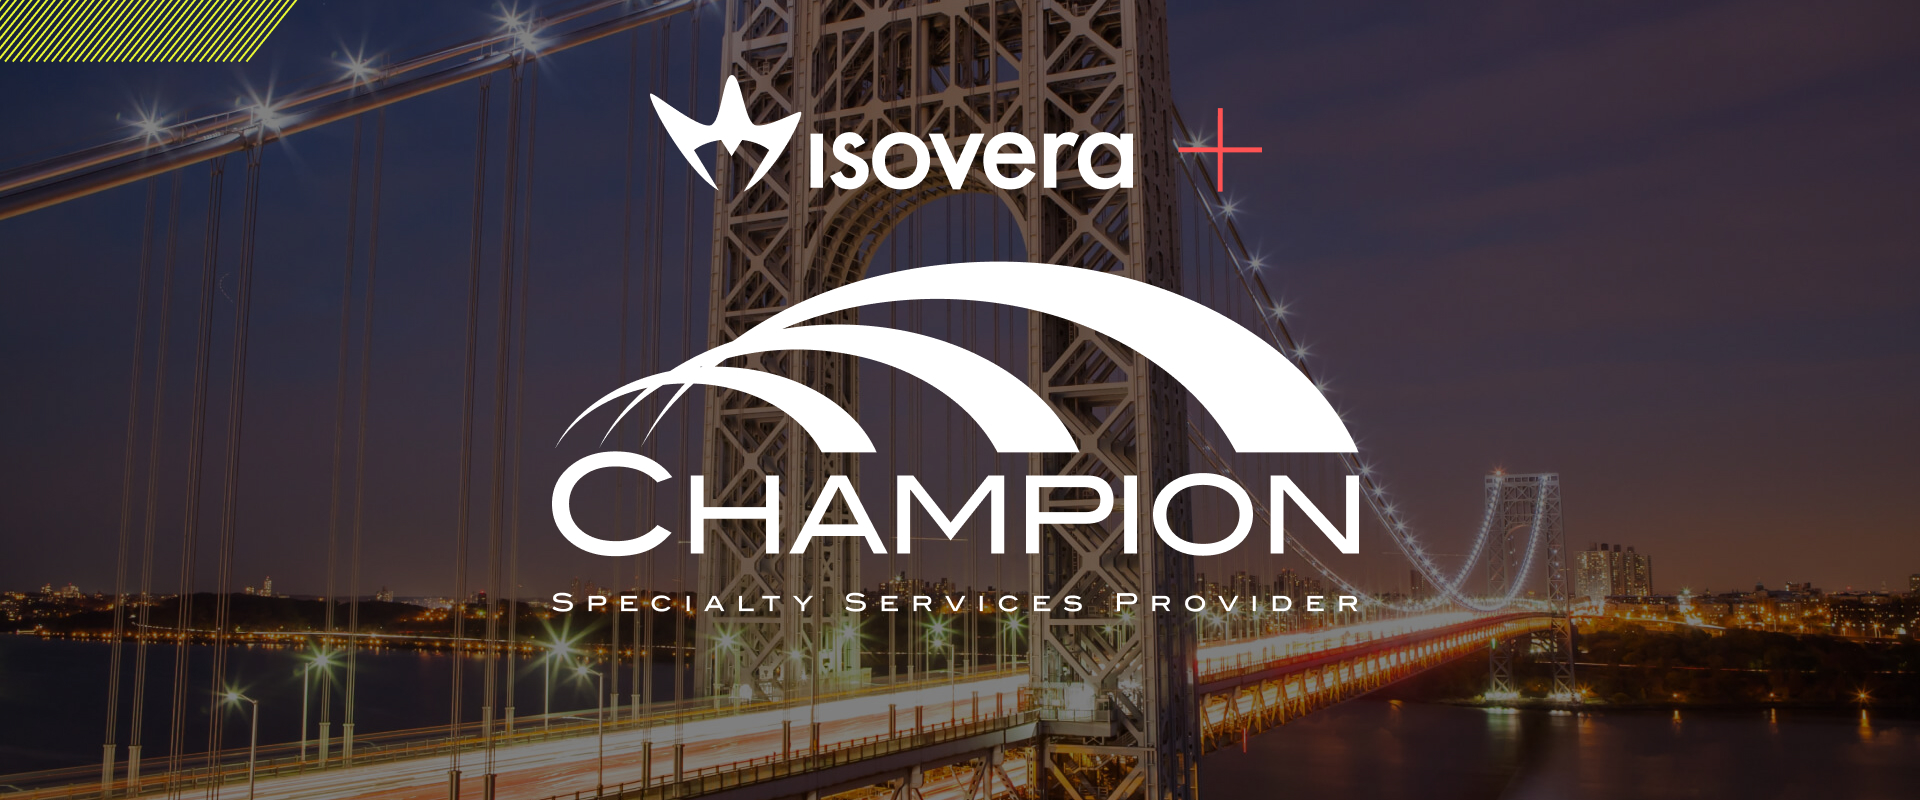 Isovera Champion Partnership PR 1